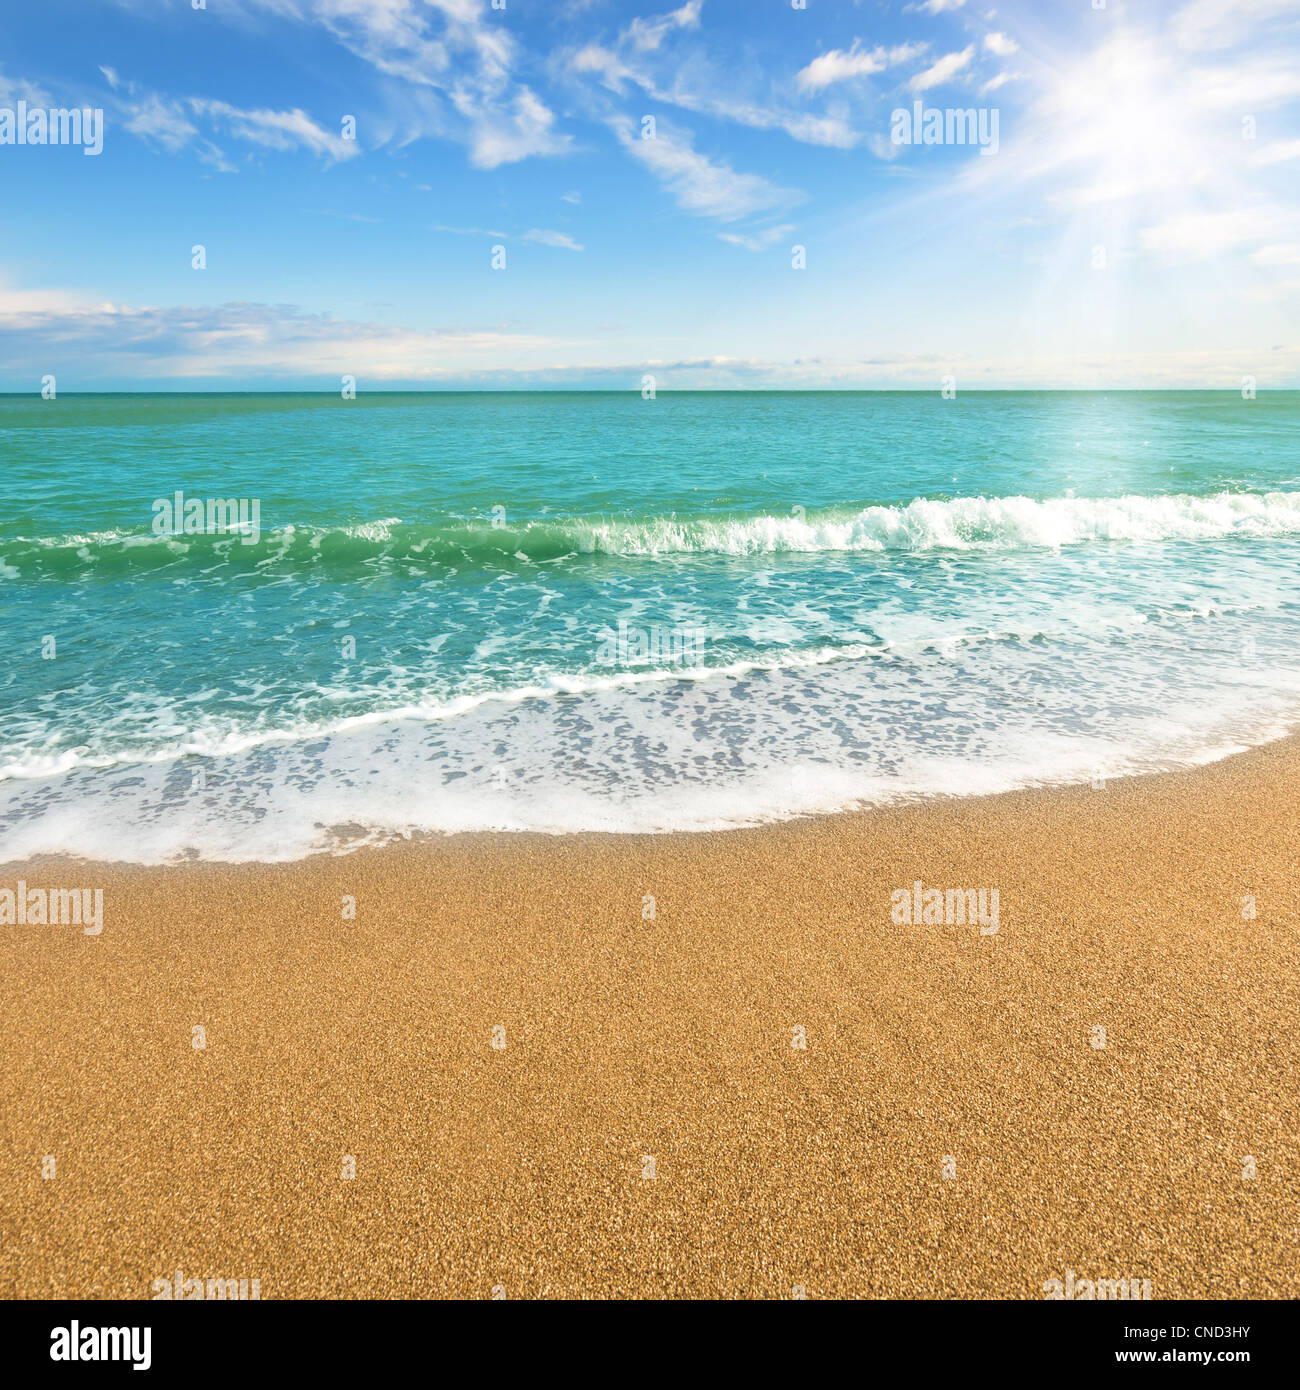 Sea shore at summer sunny day Stock Photo